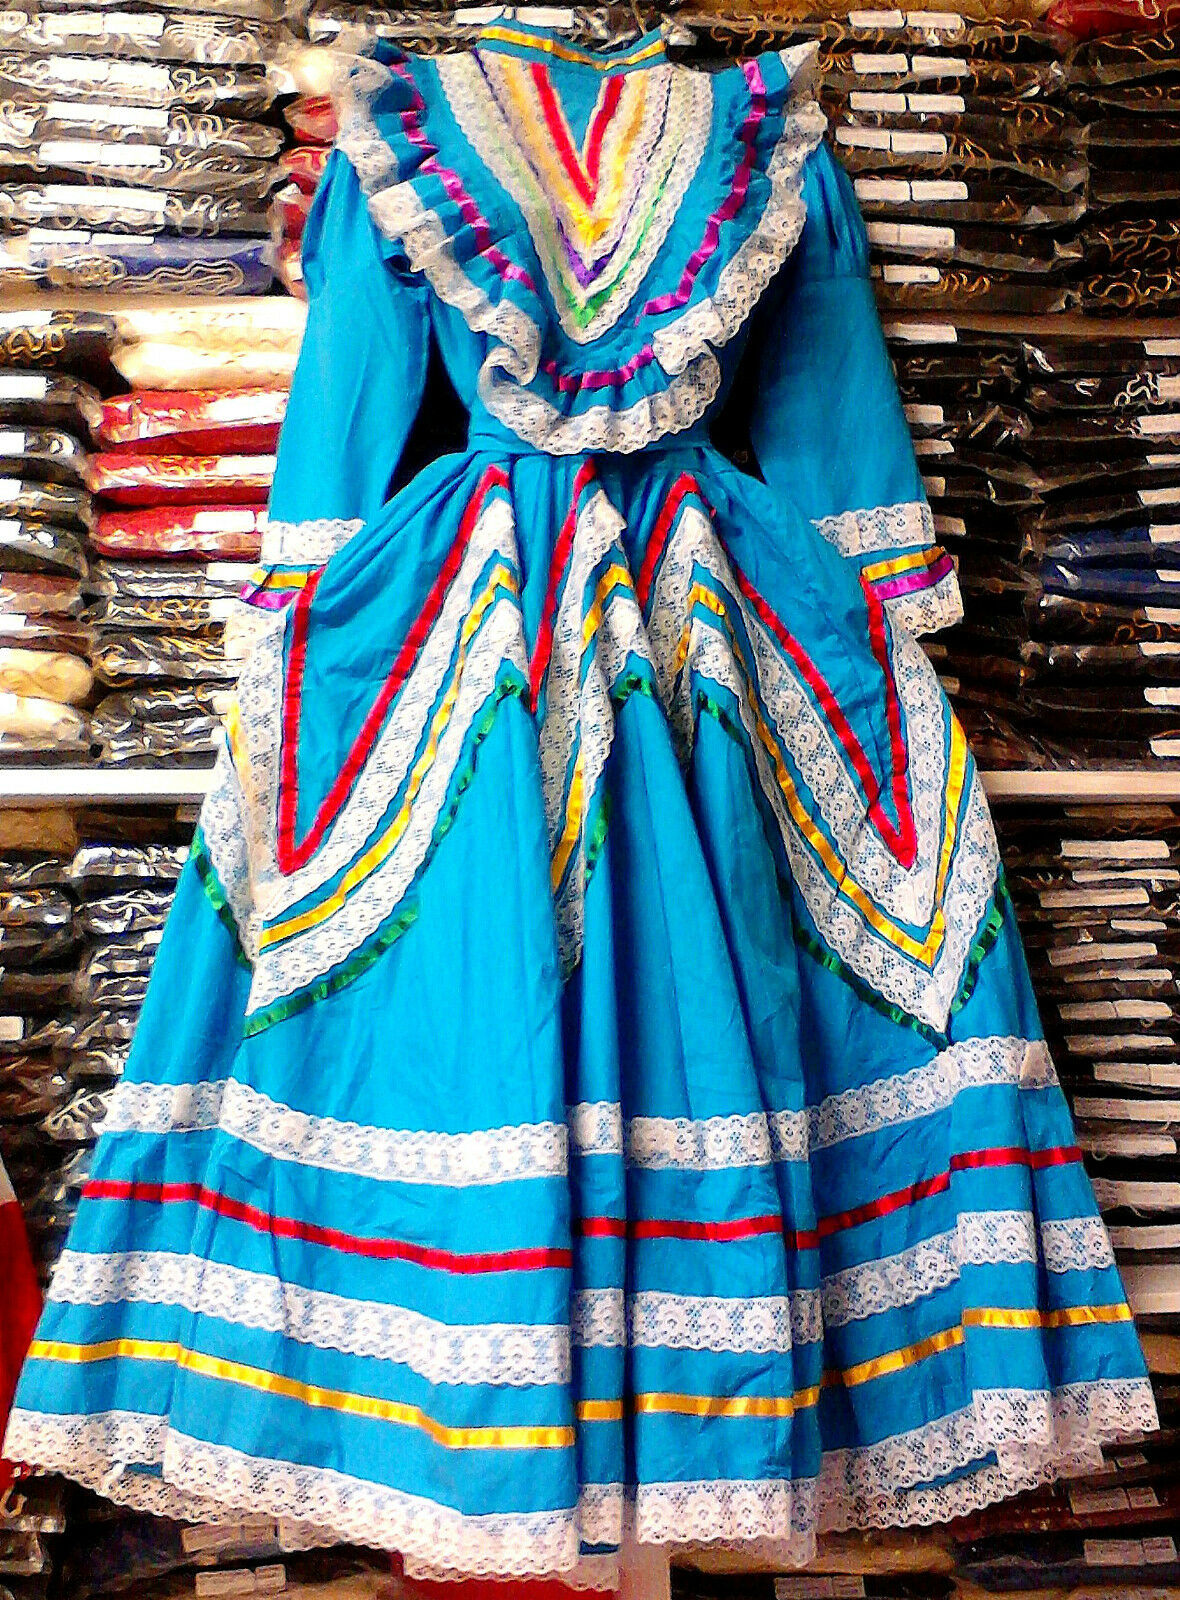 folkloric dresses